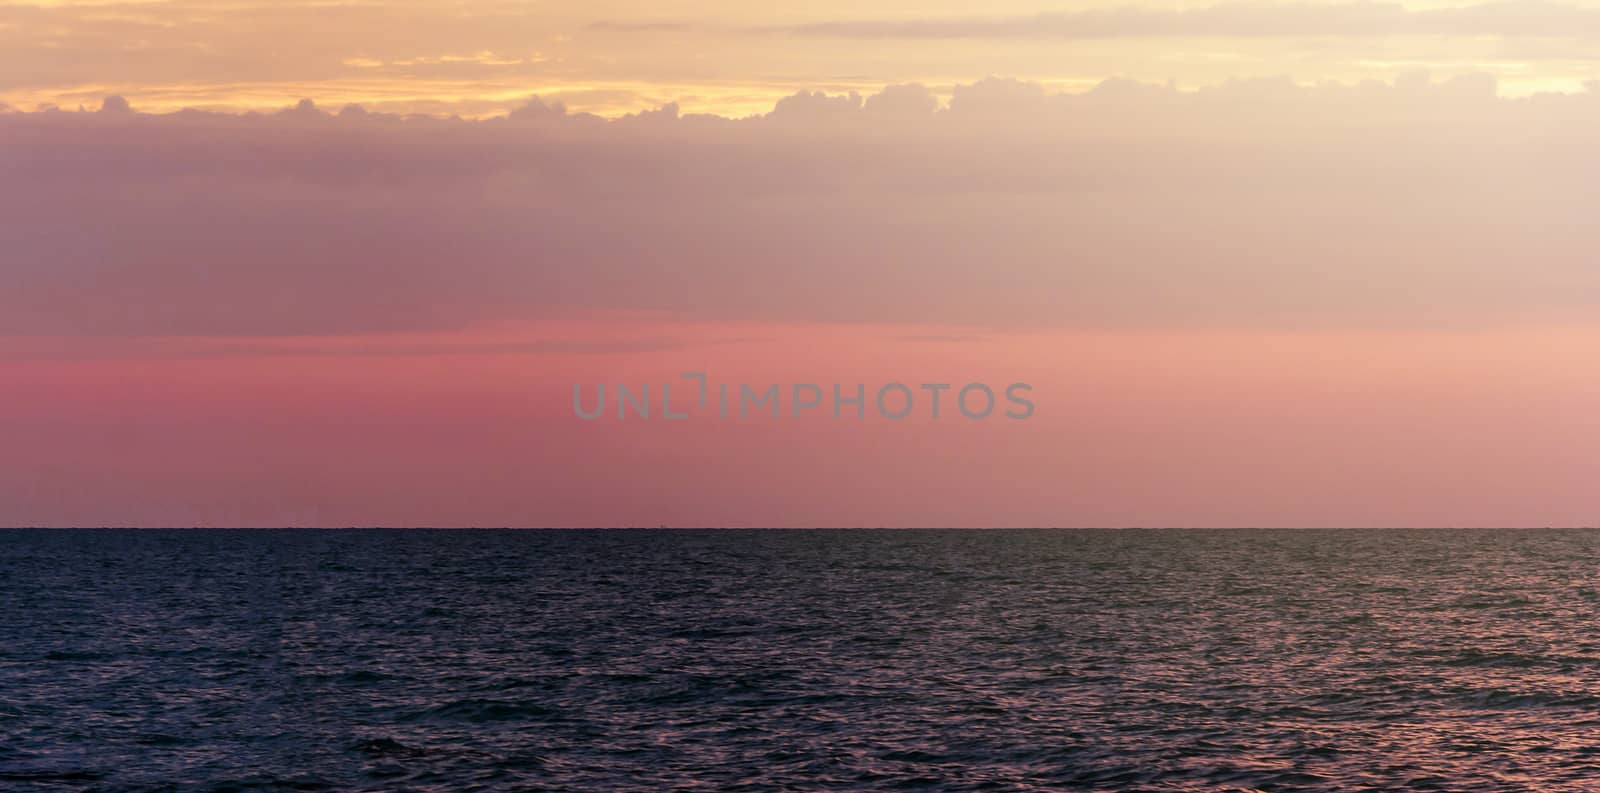 beautiful sea with sunrise light by rarrarorro